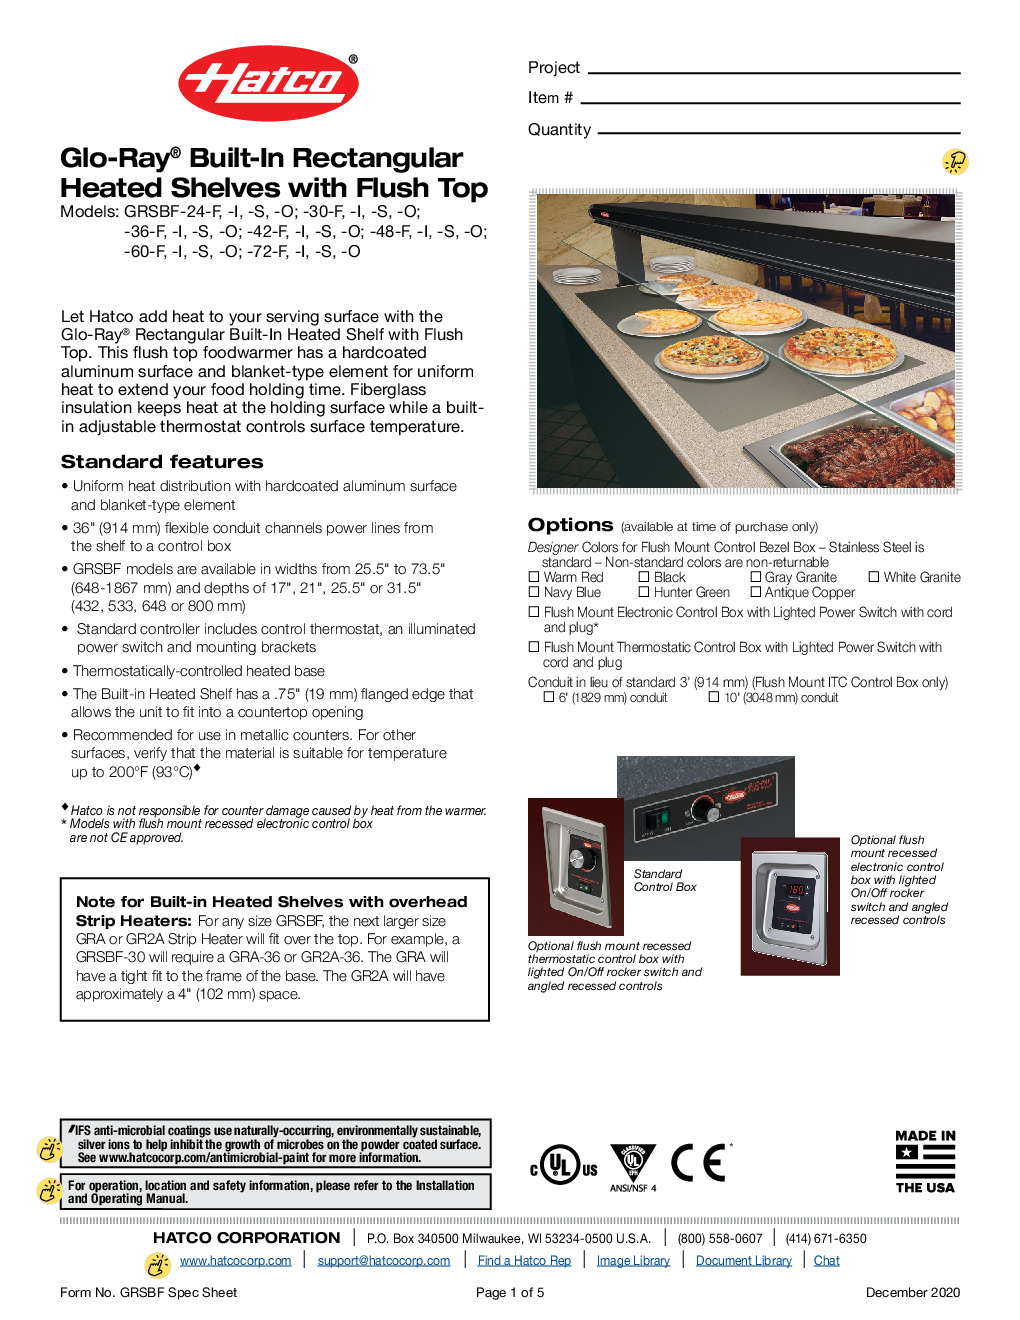 Hatco GRSBF-30-I-120QS Heated Shelf Food Warmer